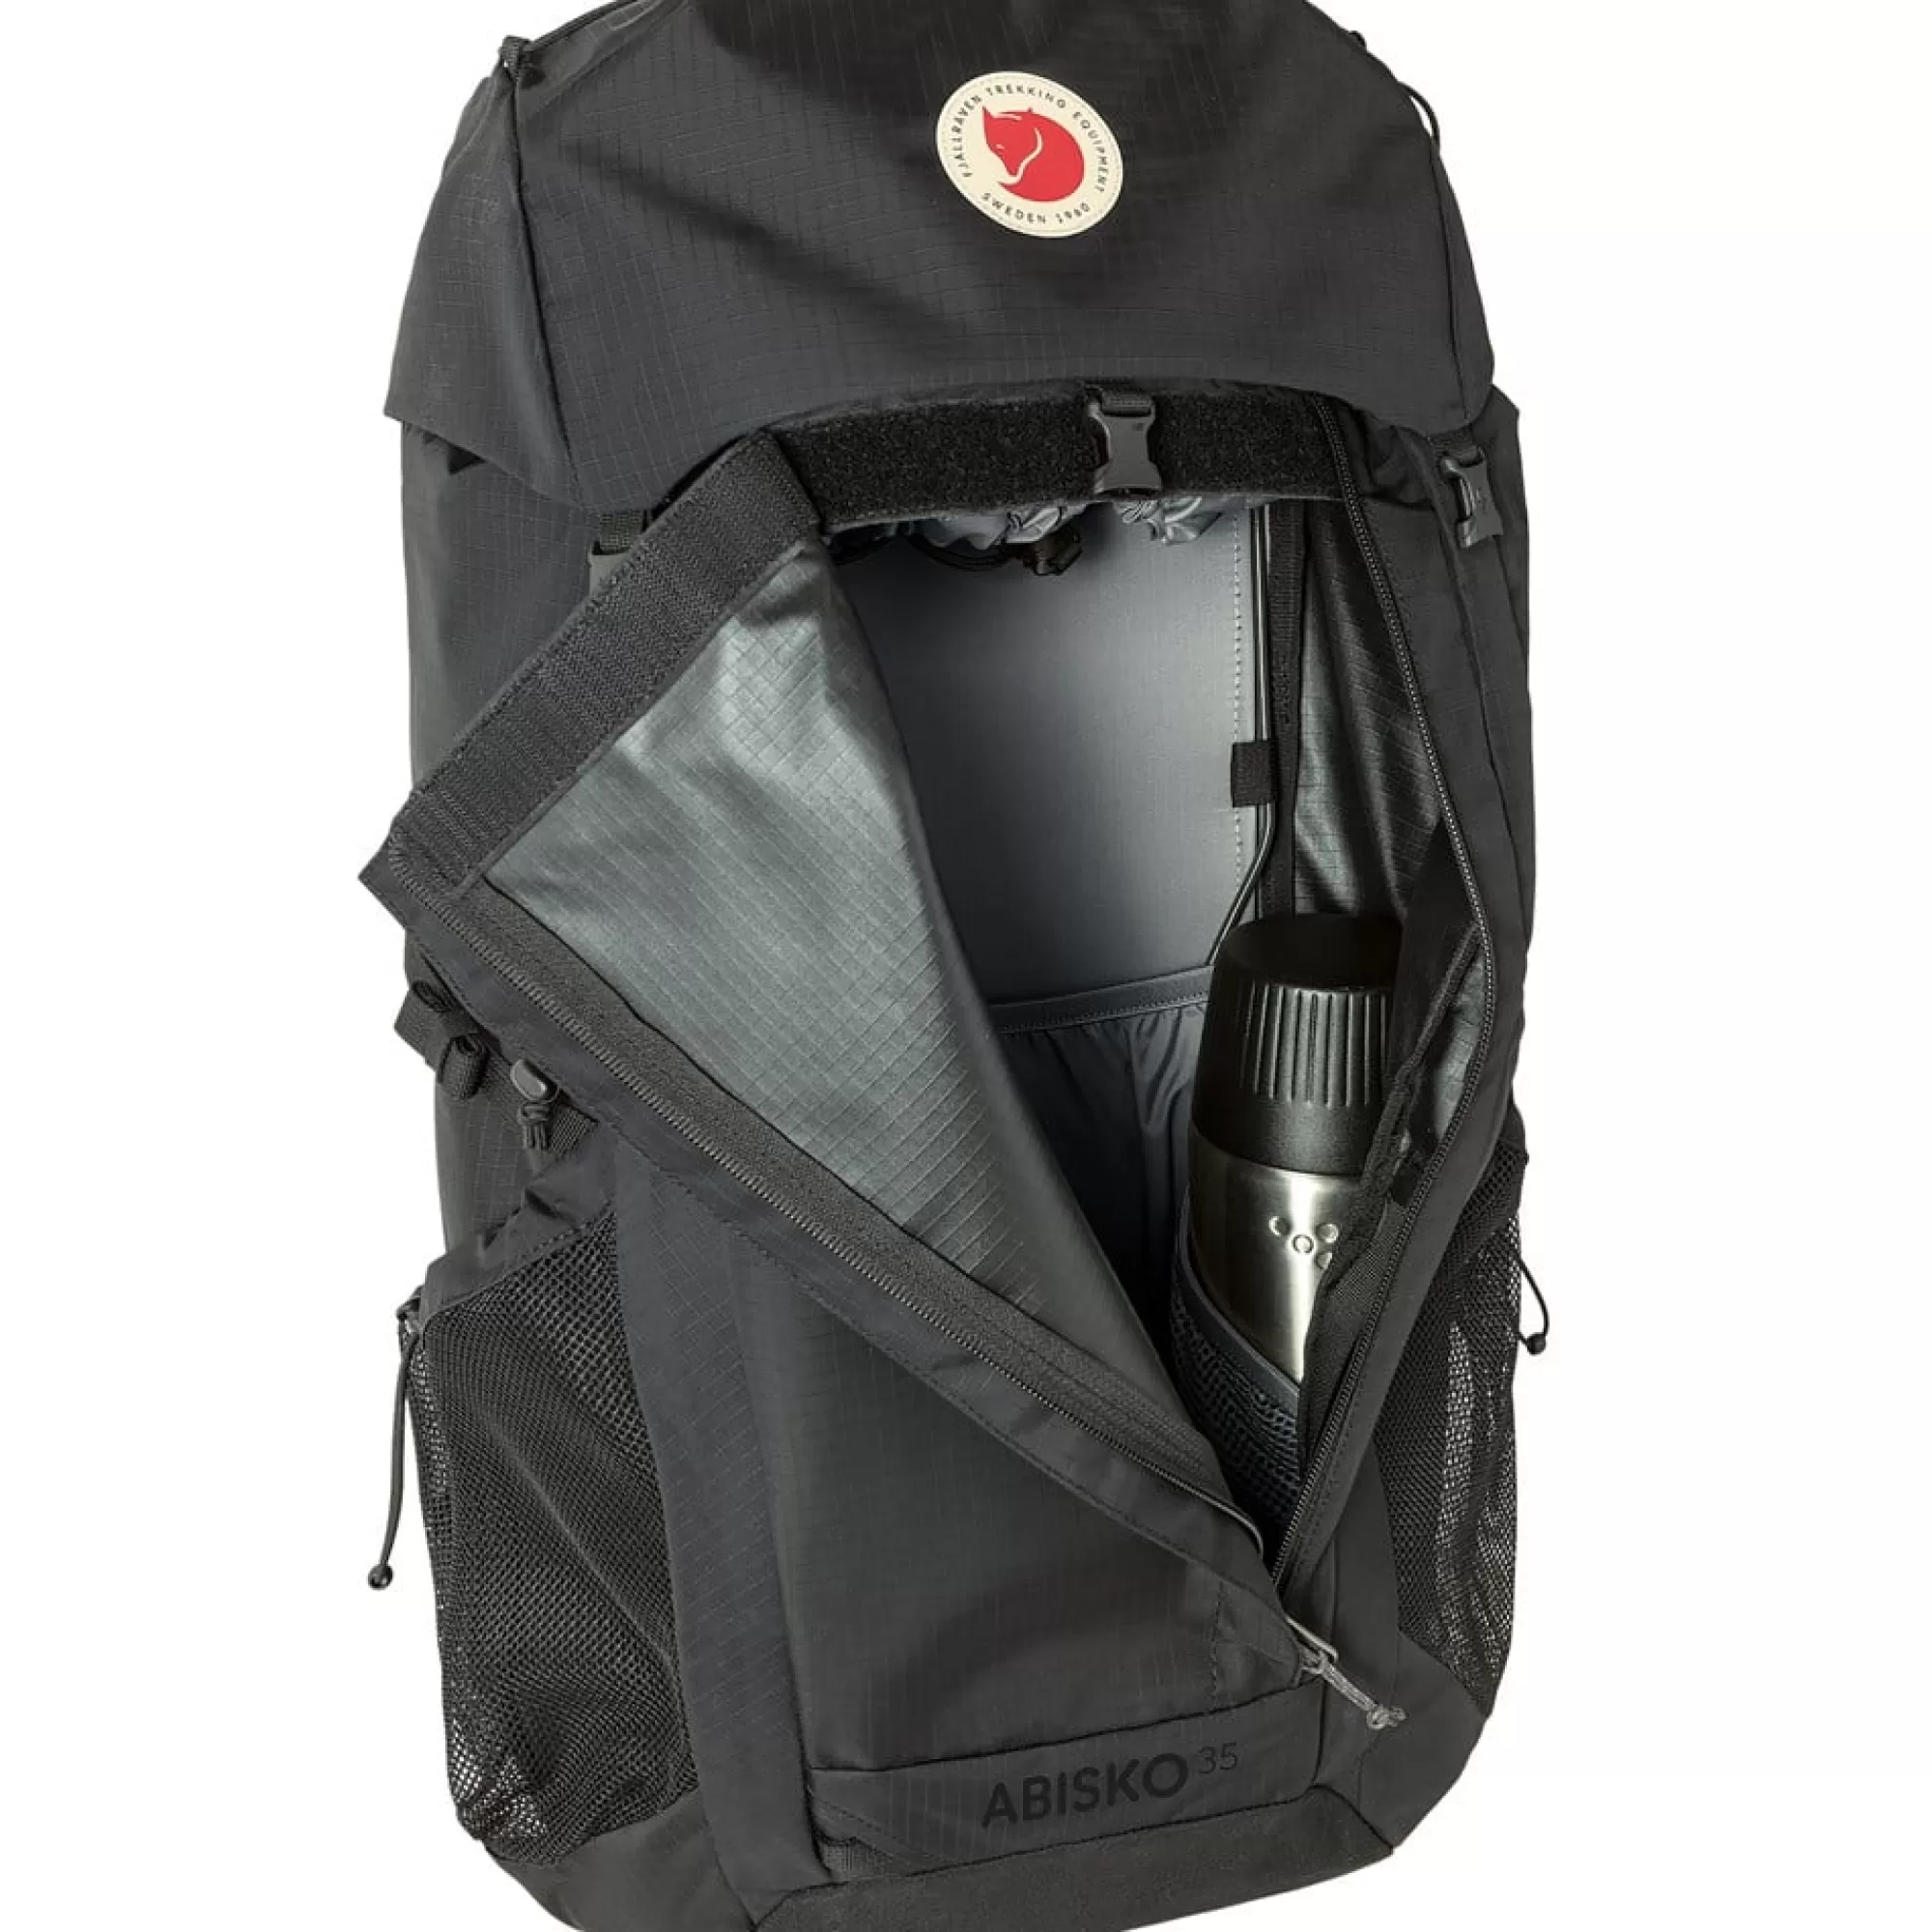 Backpacks & bags*WOMEN Fjallraven Abisko Hike 35 M/L IronGrey